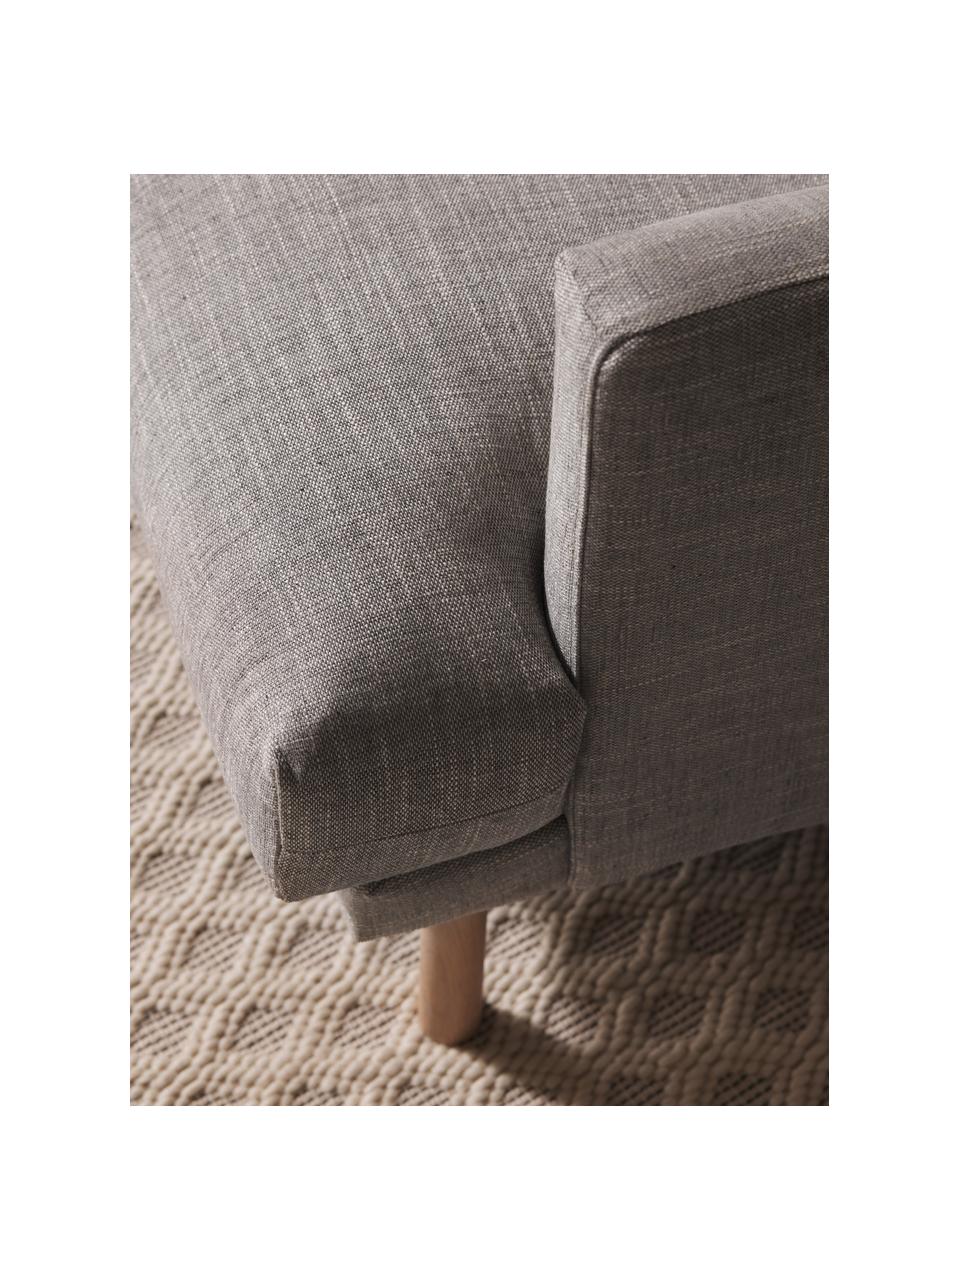 Sofa-Sessel Adrian, Bezug: 47 % Viskose, 23 % Baumwo, Gestell: Sperrholz, Füße: Eichenholz, geölt Dieses , Webstoff Hellgrau, B 90 x T 95 cm